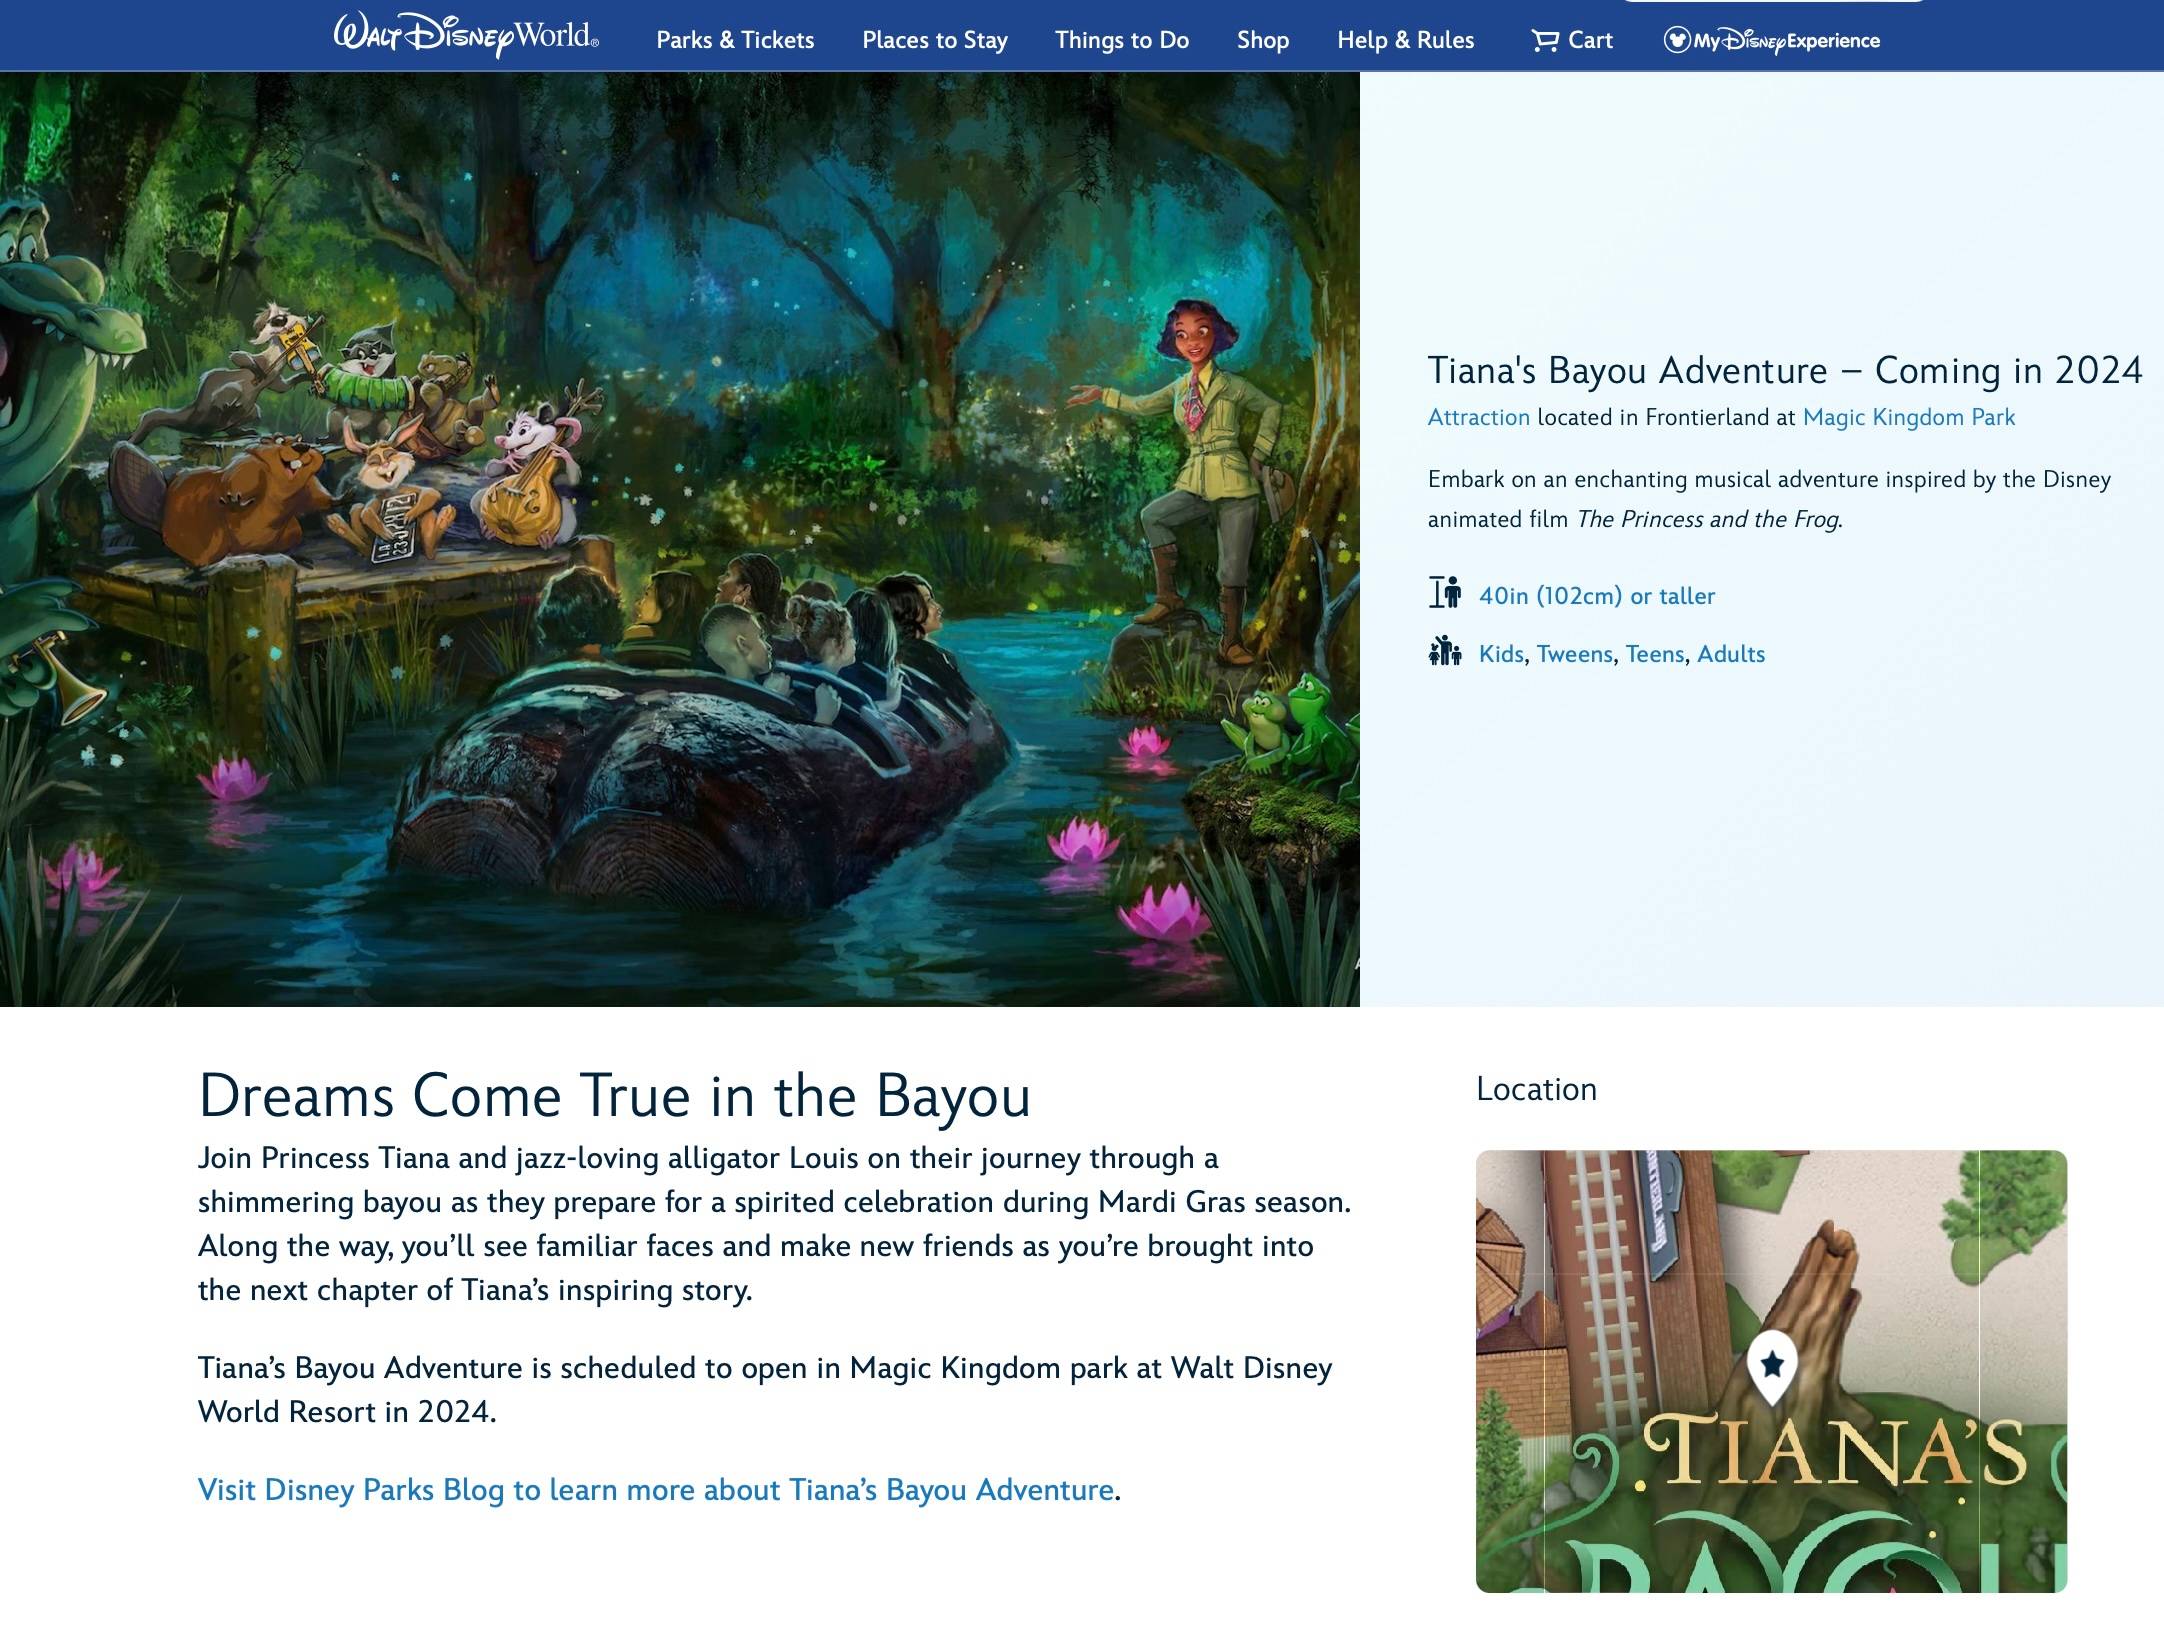 Four Seasons Orlando cuts the ribbon on new Walt Disney World